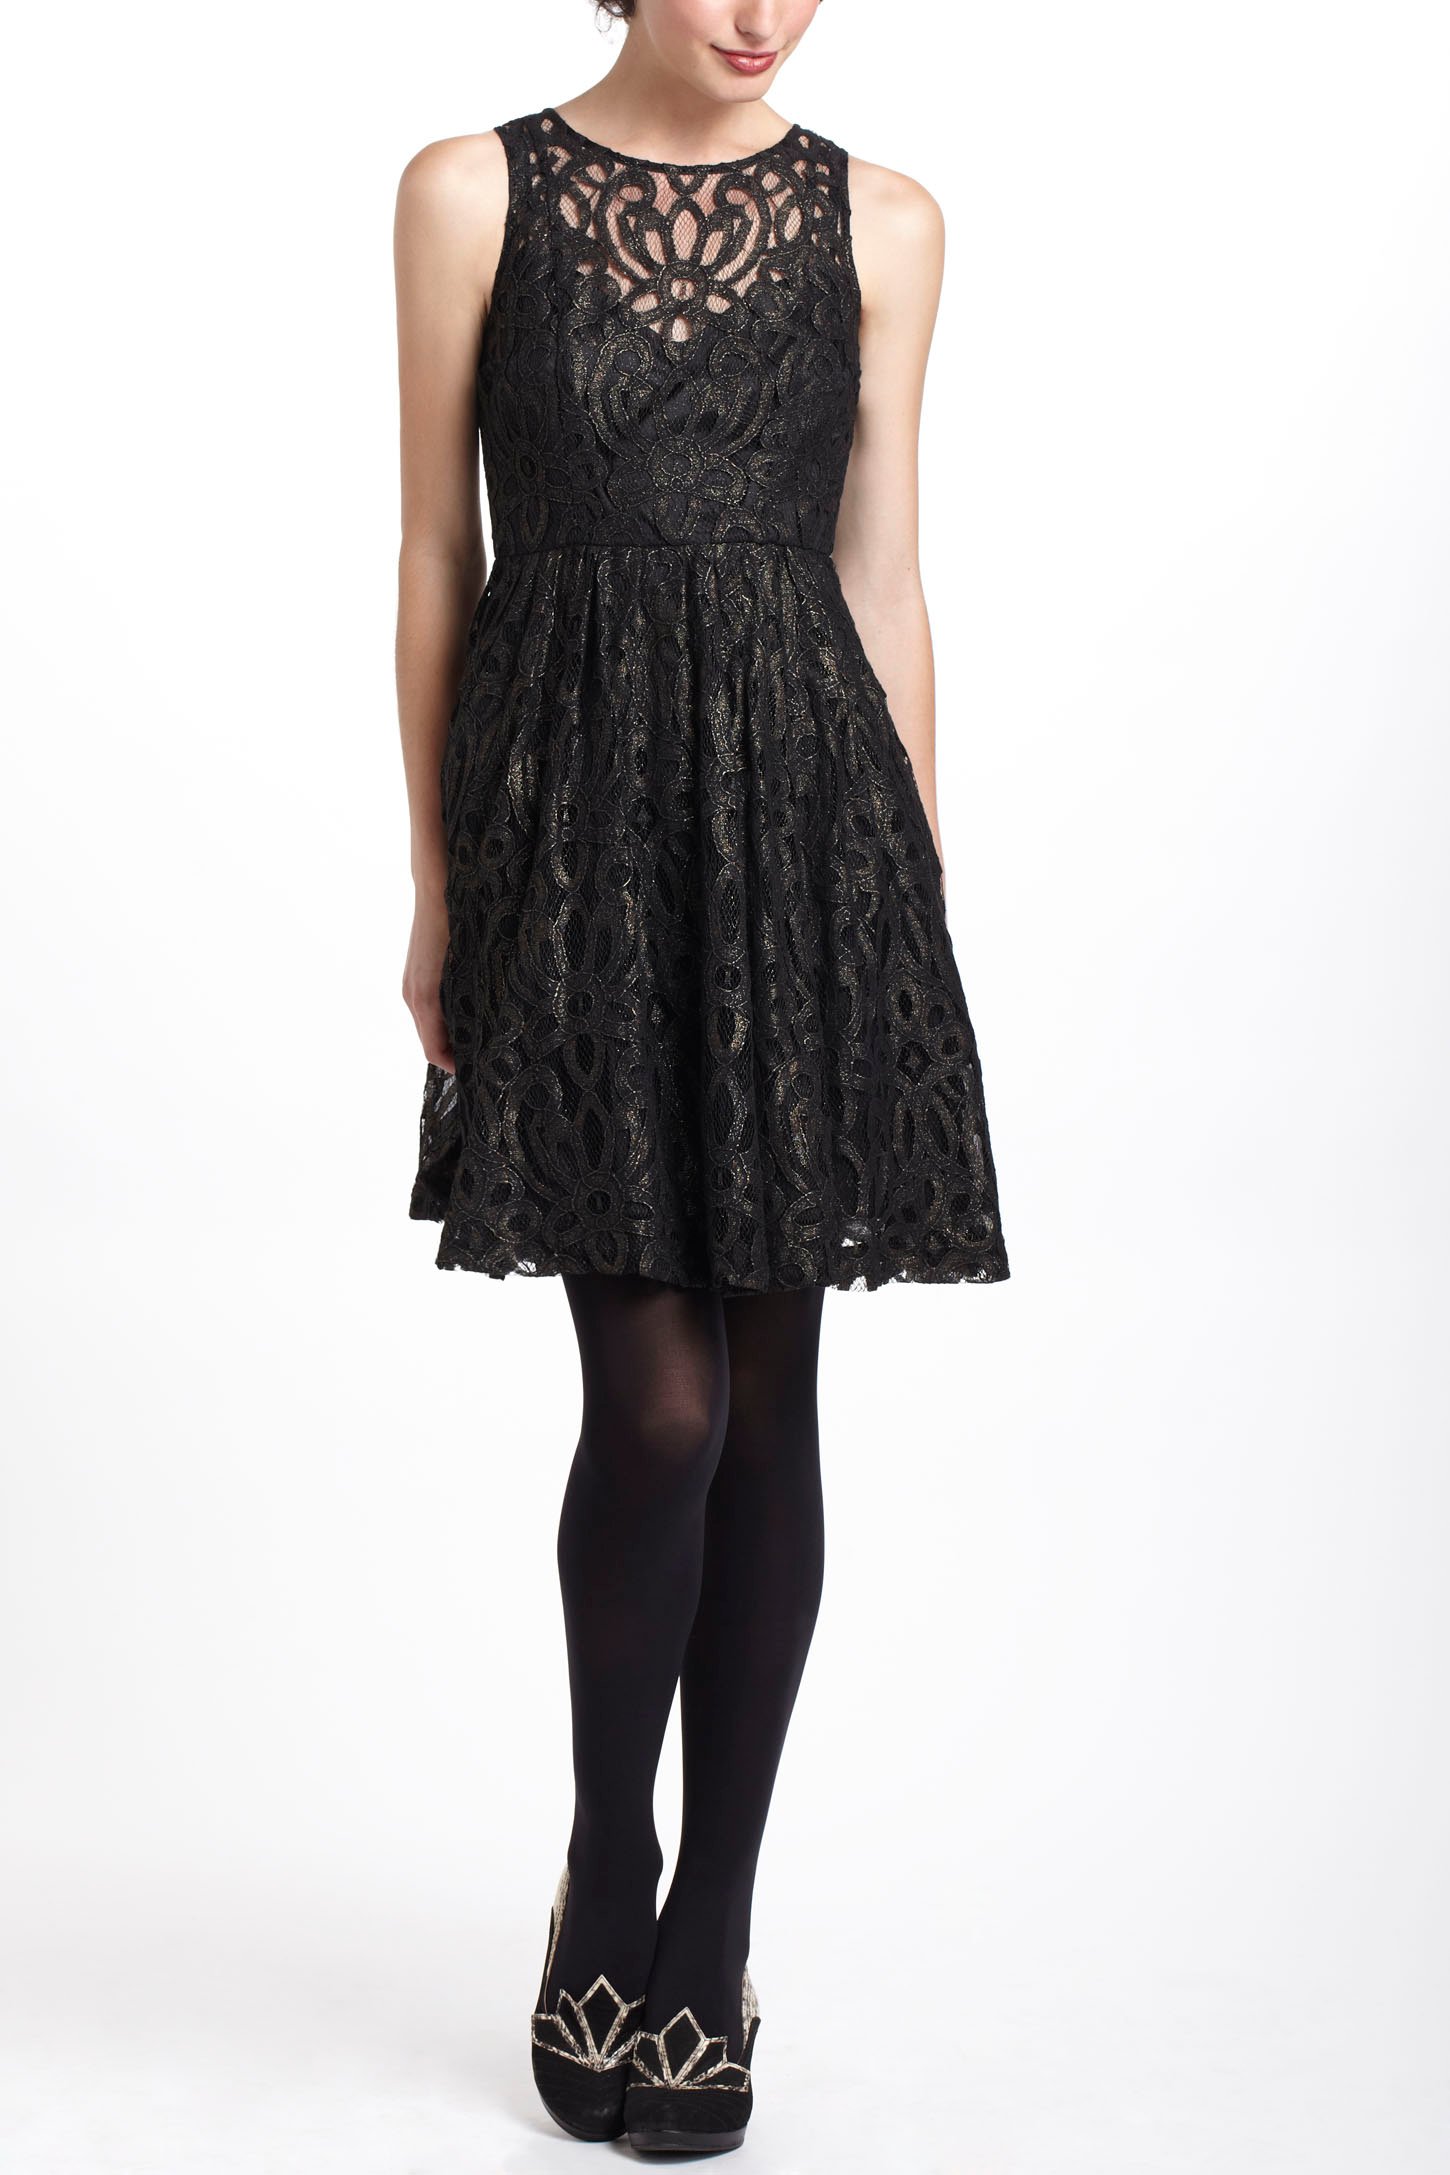 Lyst - Anthropologie Mariposa Lace Dress in Black